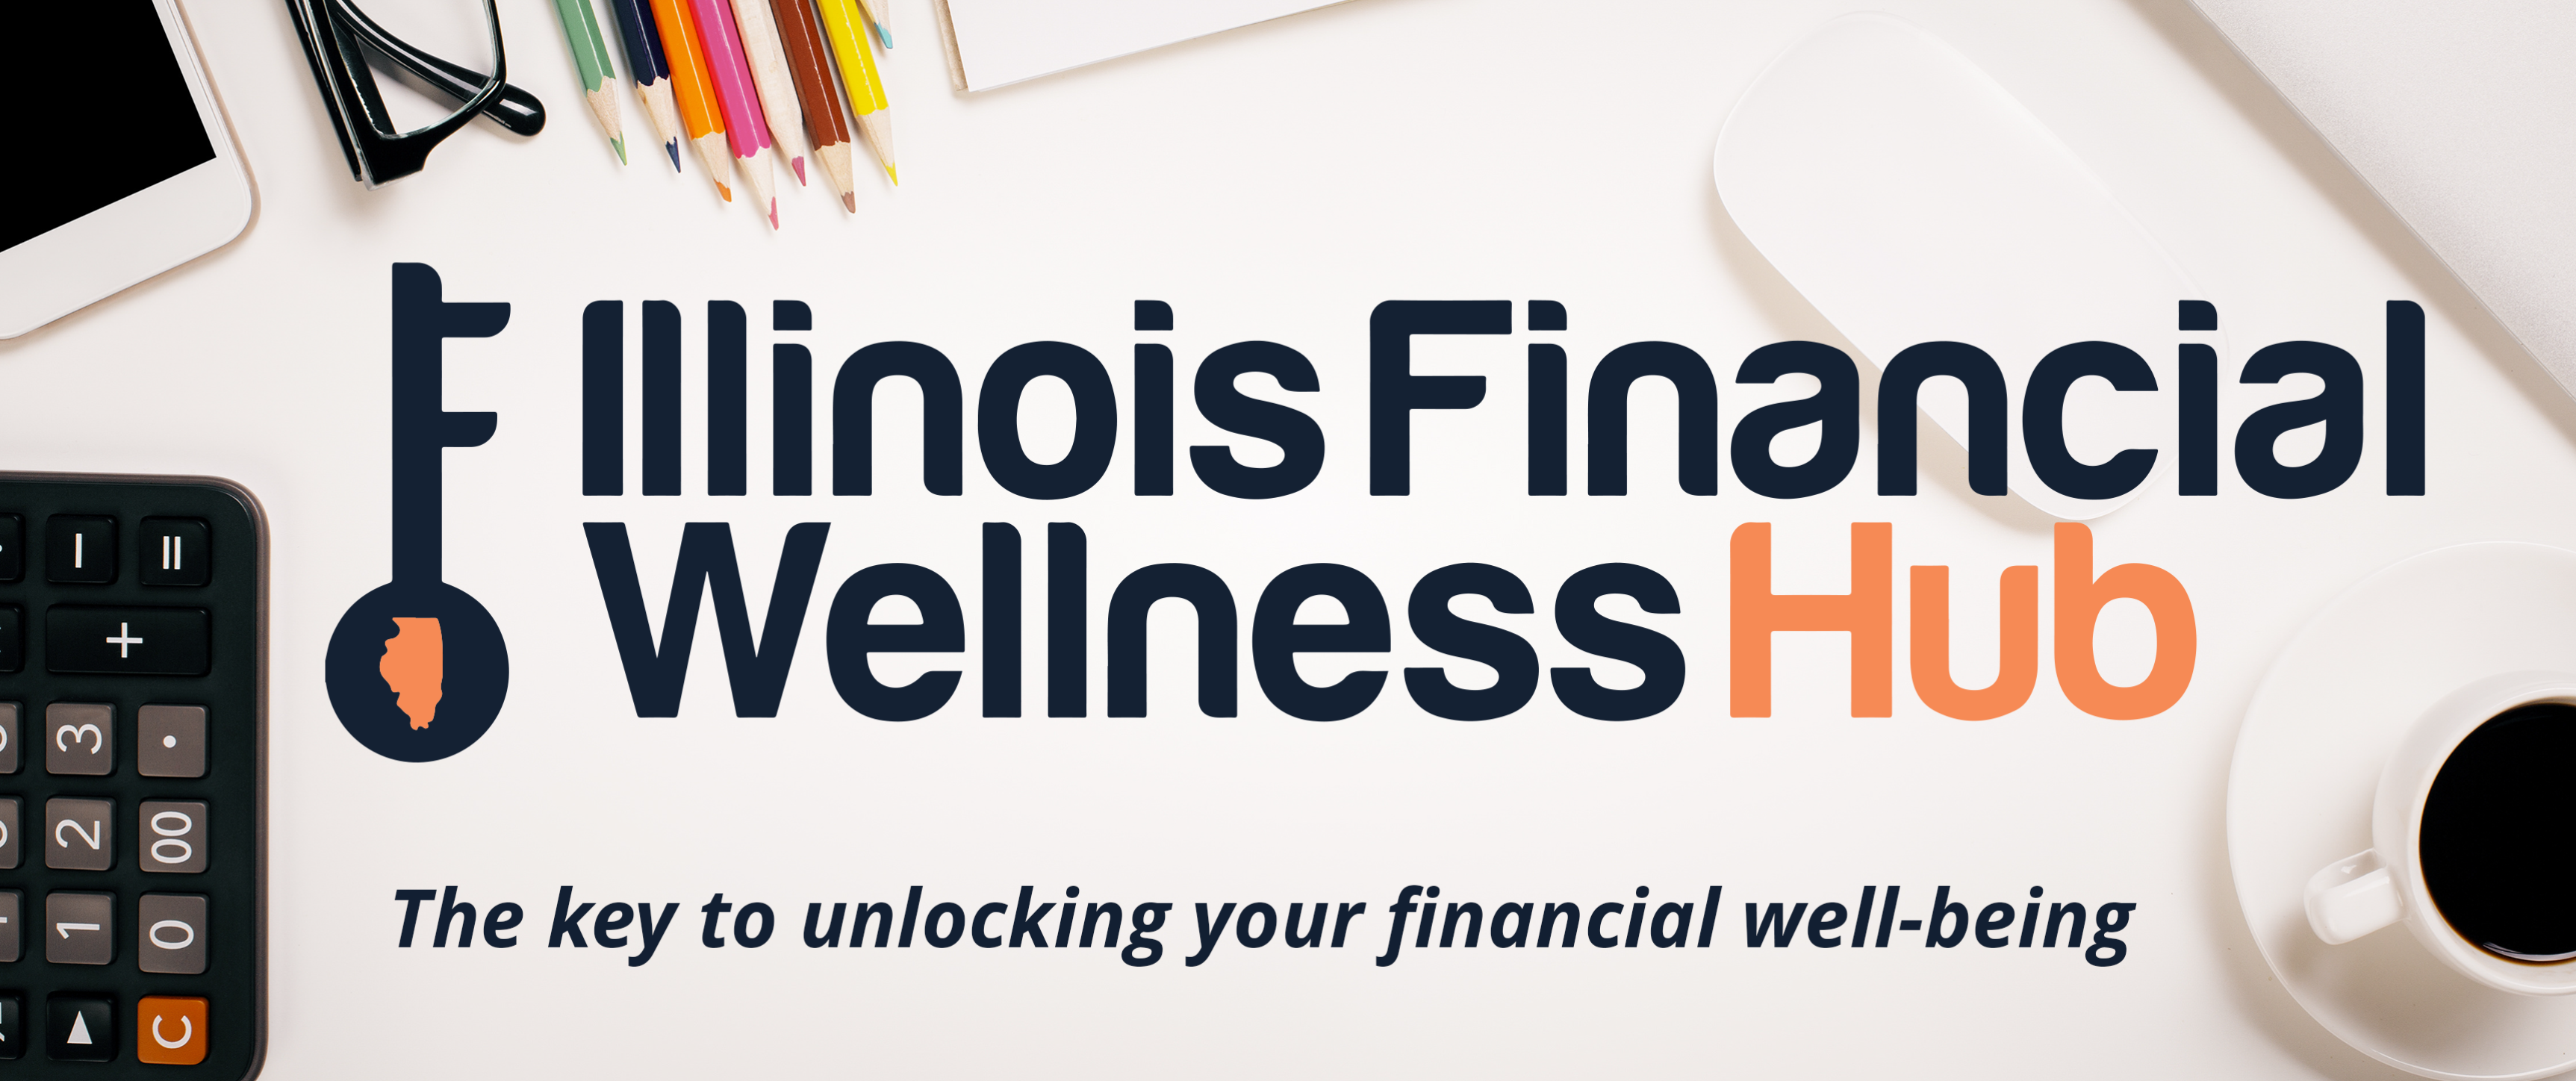 Illinois Financial Wellness Hub Banner